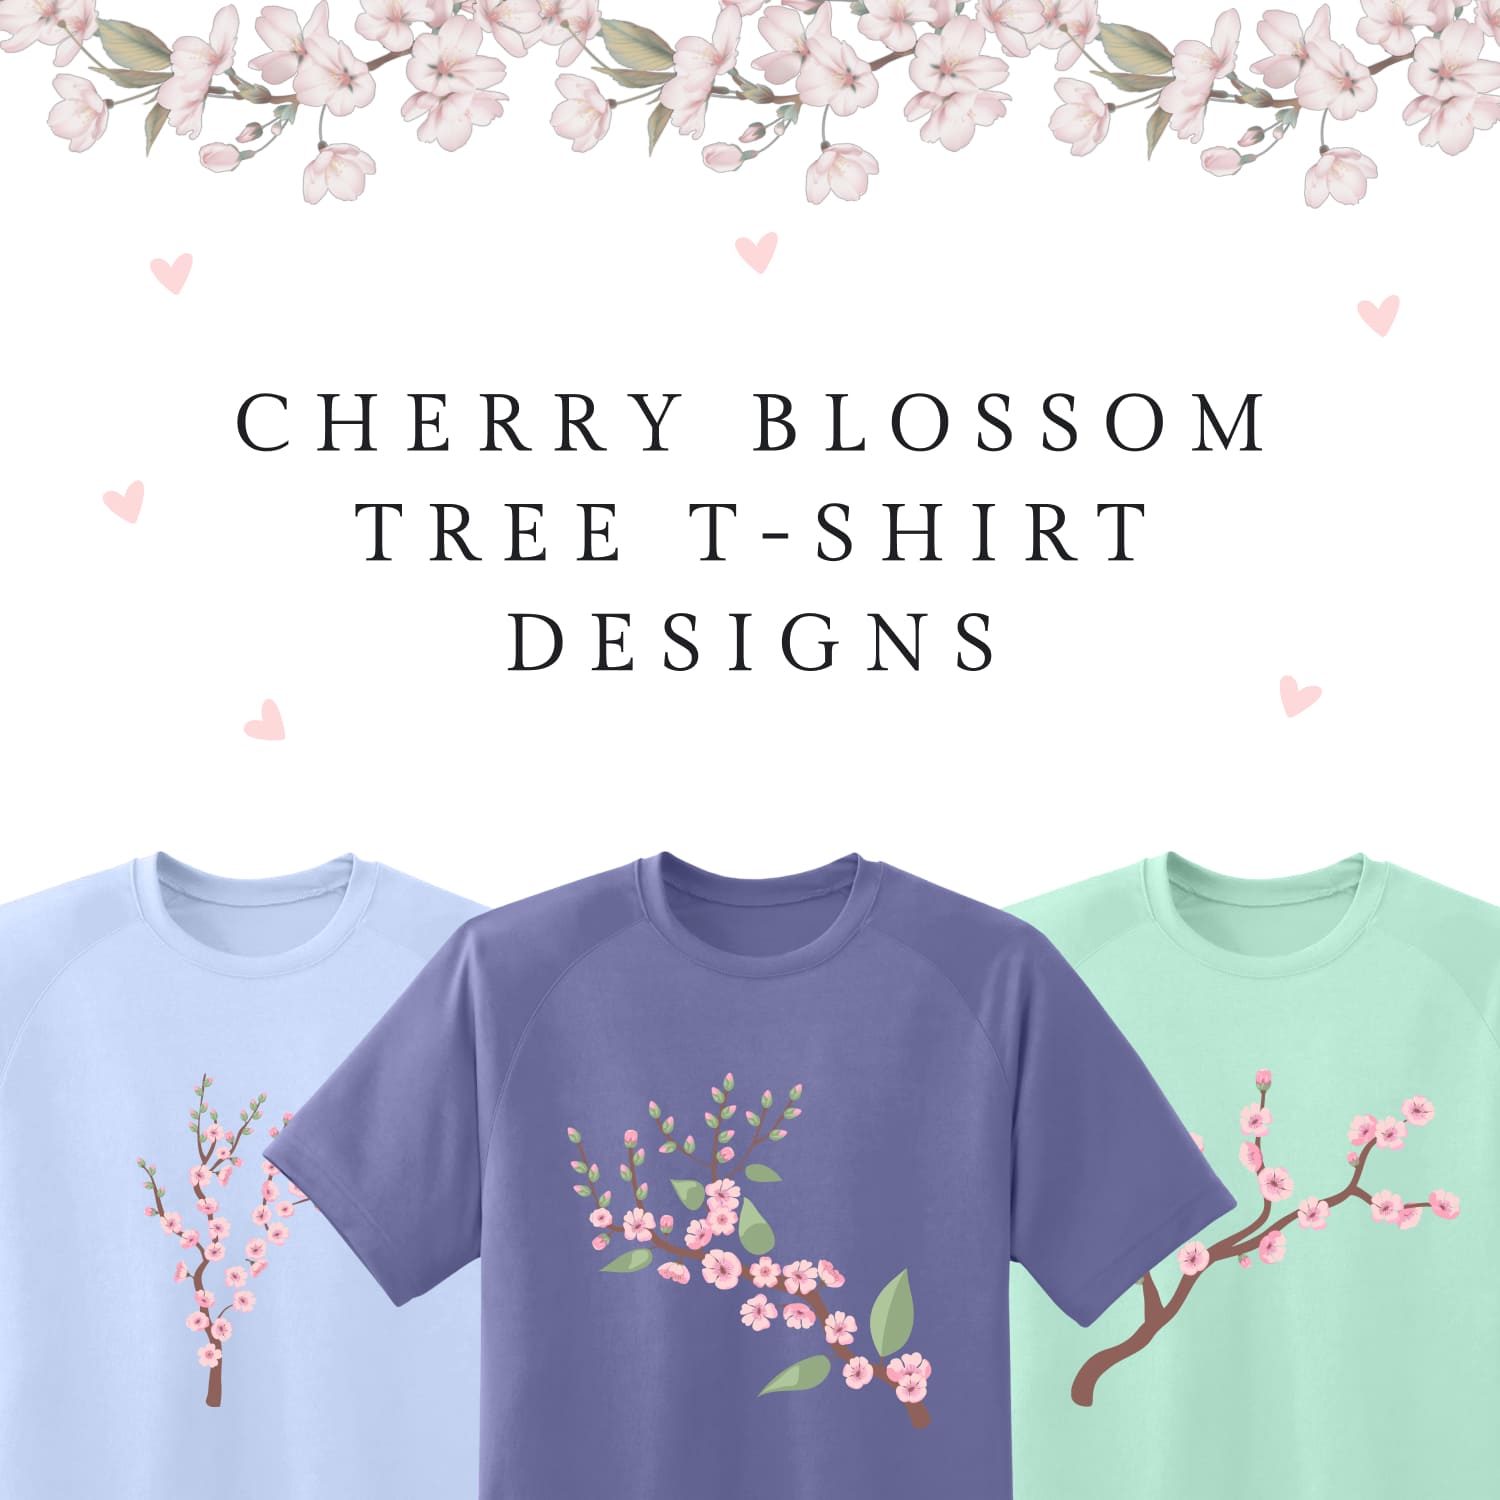 Preview cherry blossom tree t shirt designs.